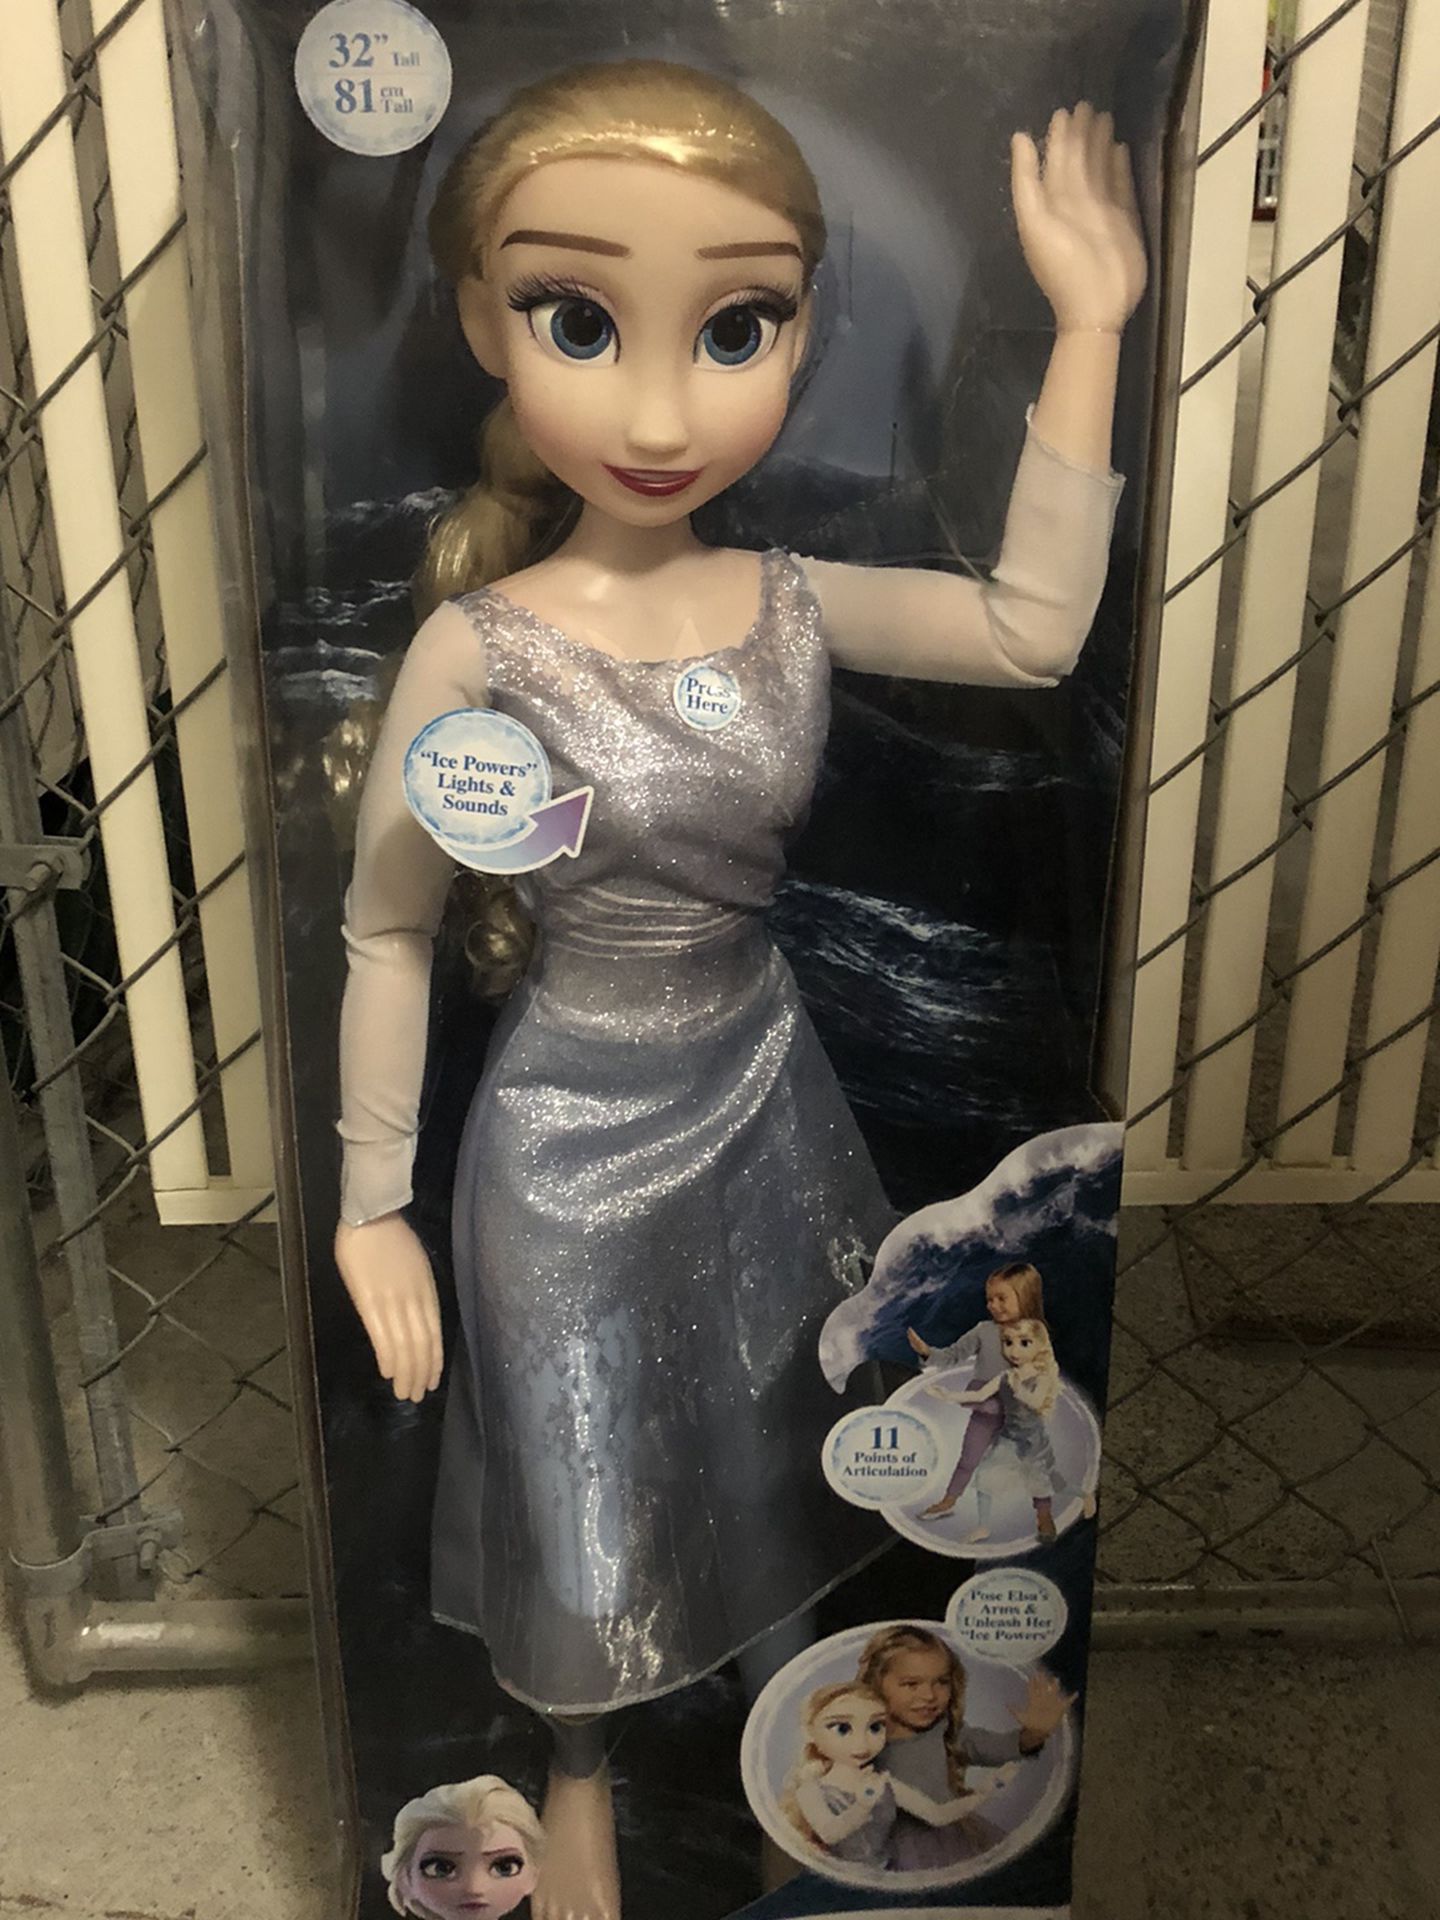 Frozen 2 Ice Powers Playdate Elsa 32” Tall